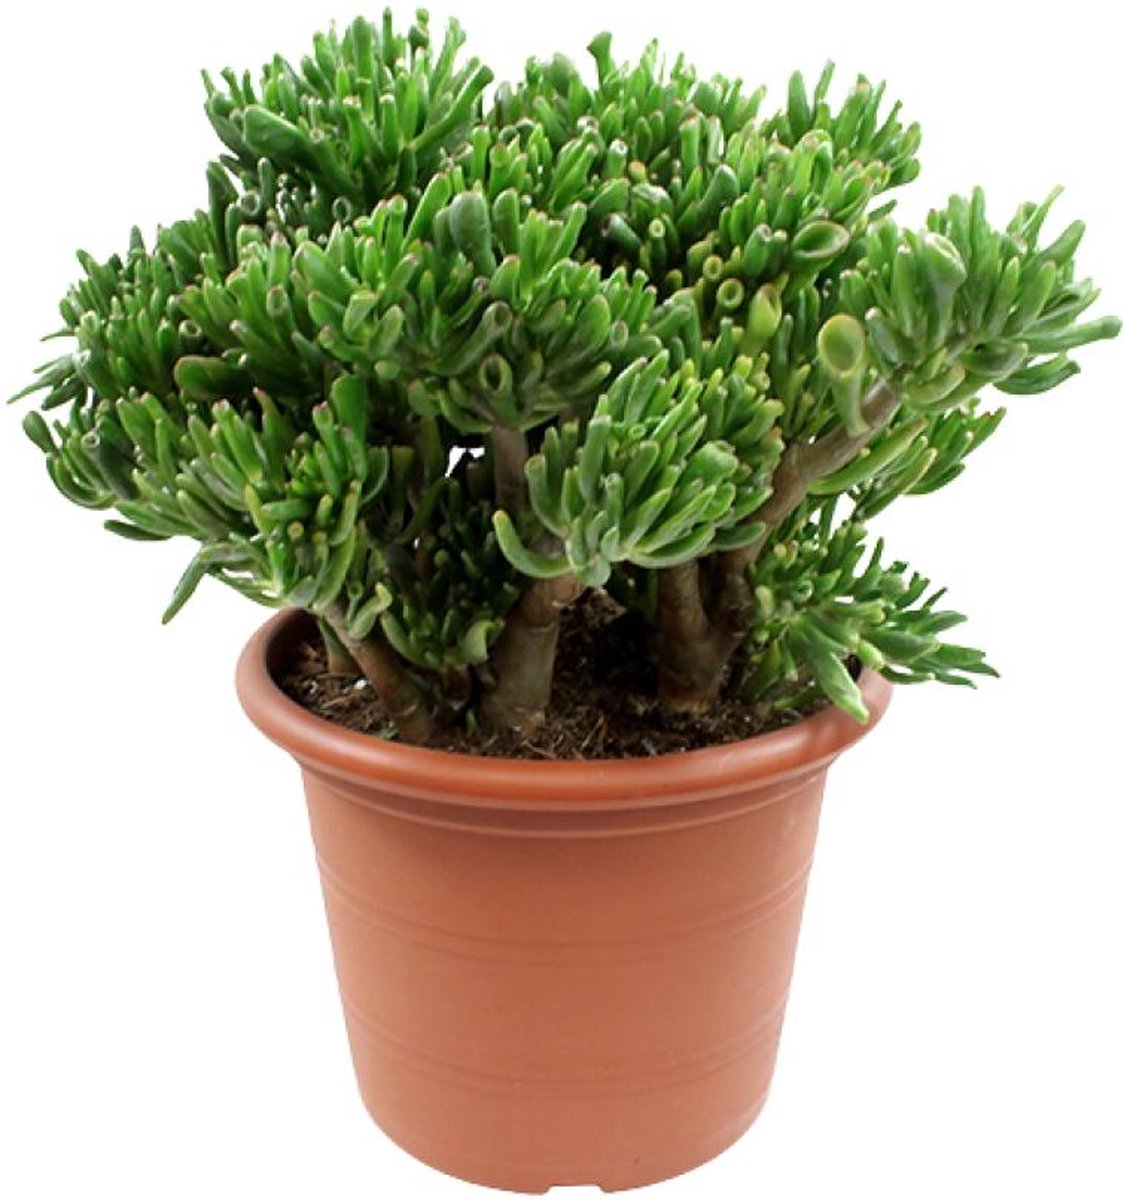 Vetplant - Kussentjesvetplant (Crassula) - Hoogte: 50 cm - van Botanicly